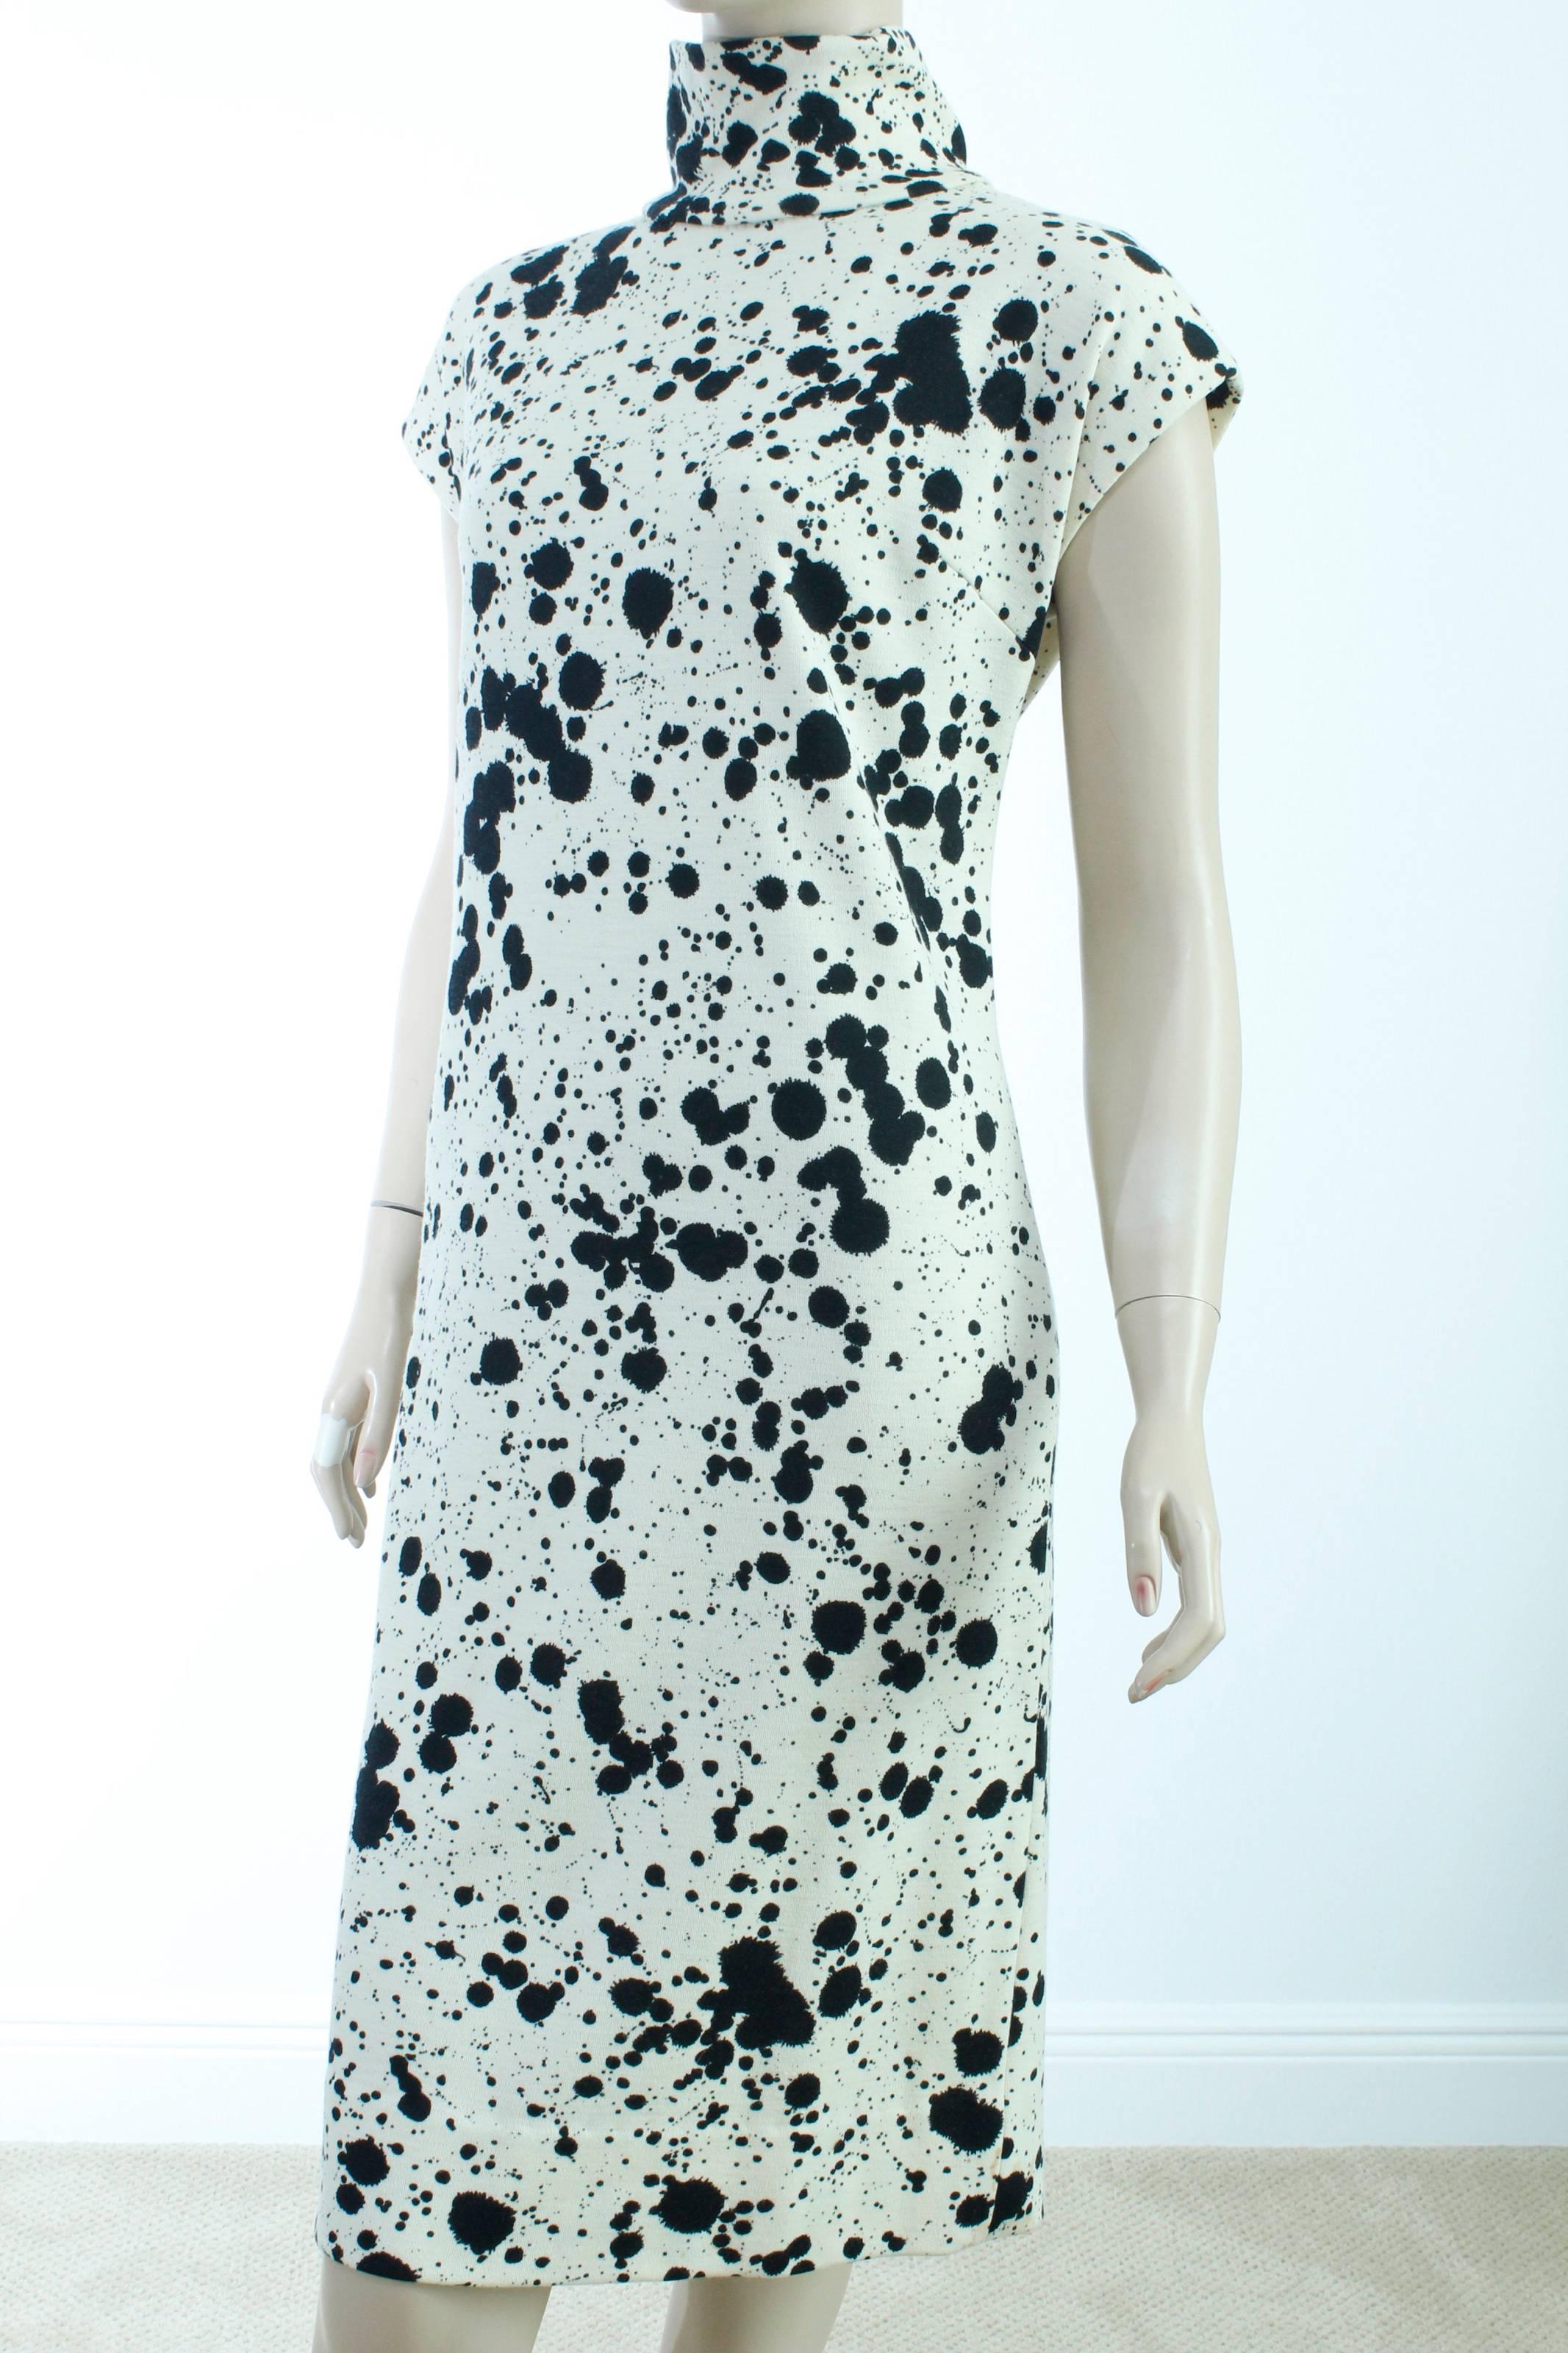 Women's Rare Bonnie Cashin for Sills Black + White Paint Spatter Knit Dress Mod Sz M